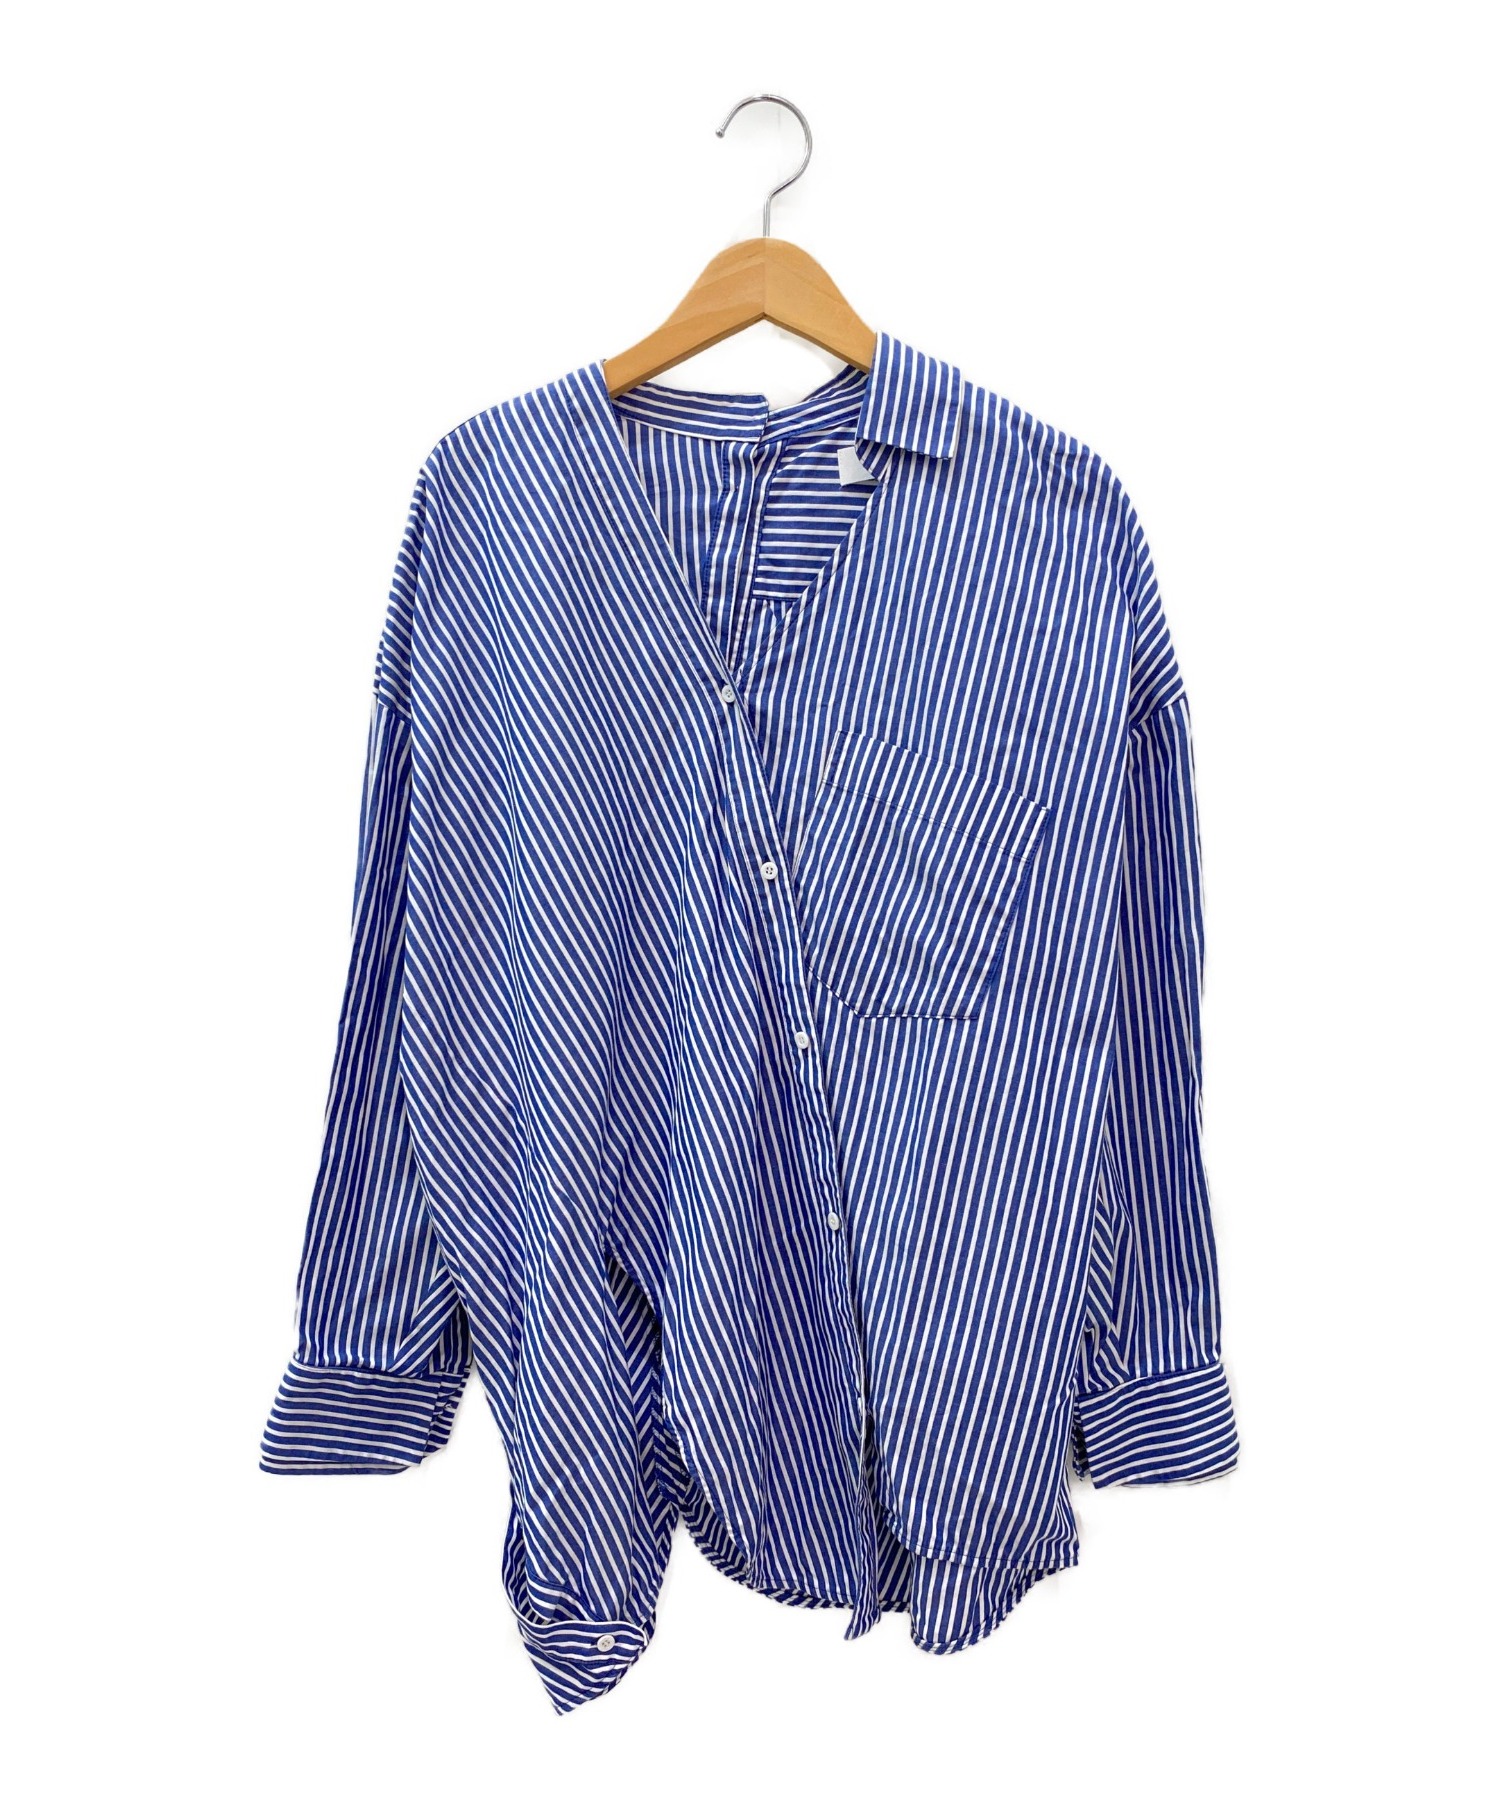 ENFOLD (エンフォルド) ストライプアシンメトリーシャツ ブルー×ホワイト サイズ:38